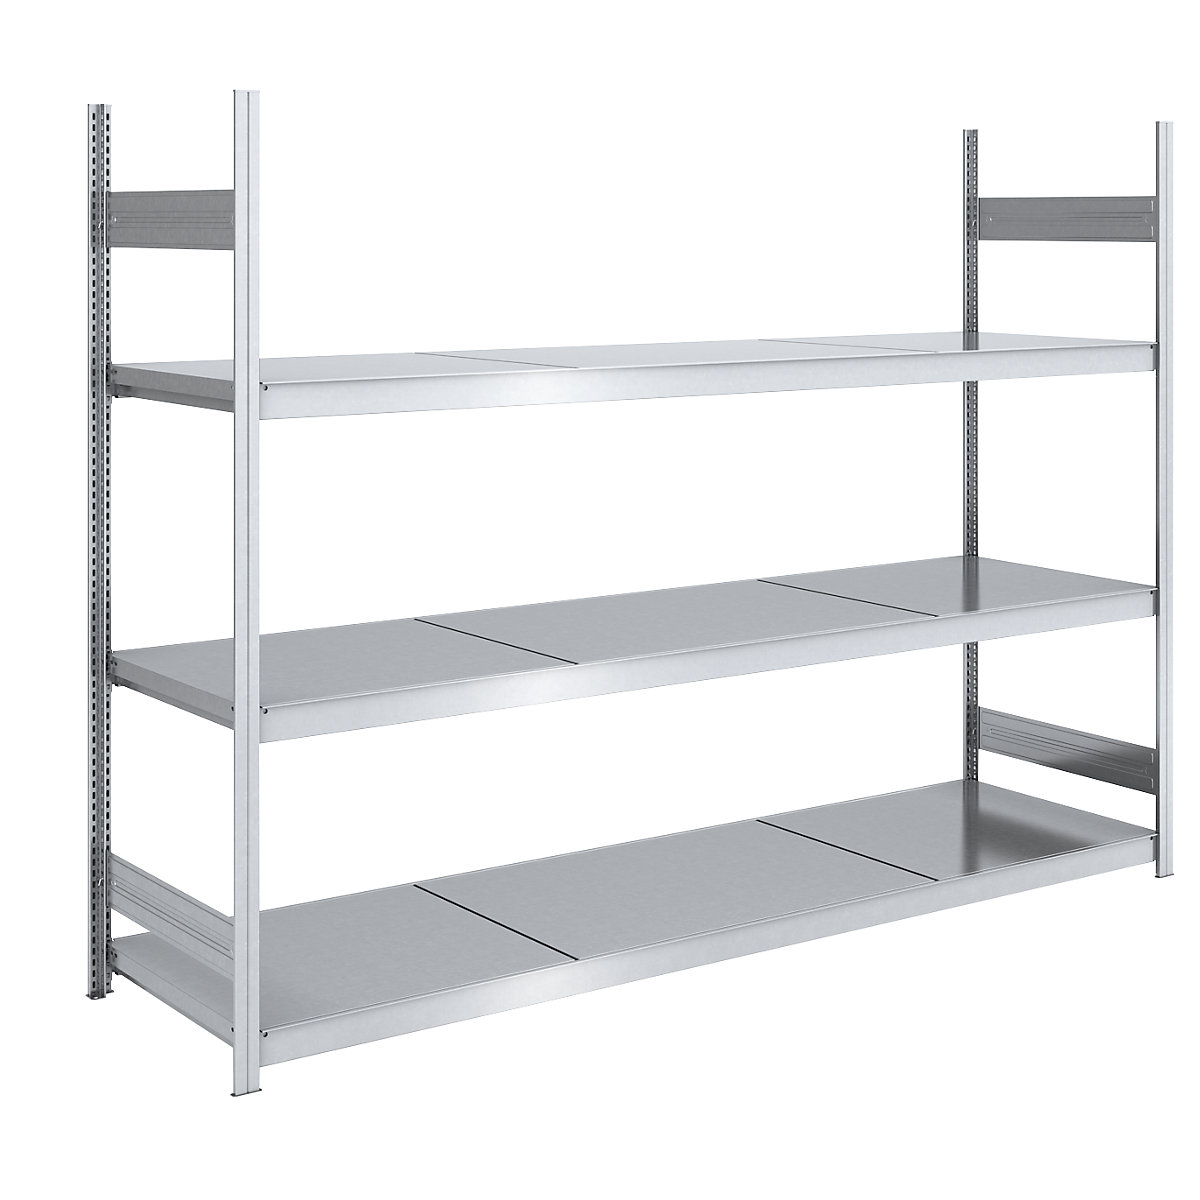 Wide span boltless shelving unit with steel shelves – hofe, height 2000 mm, shelf width 2500 mm, shelf depth 800 mm, standard shelf unit